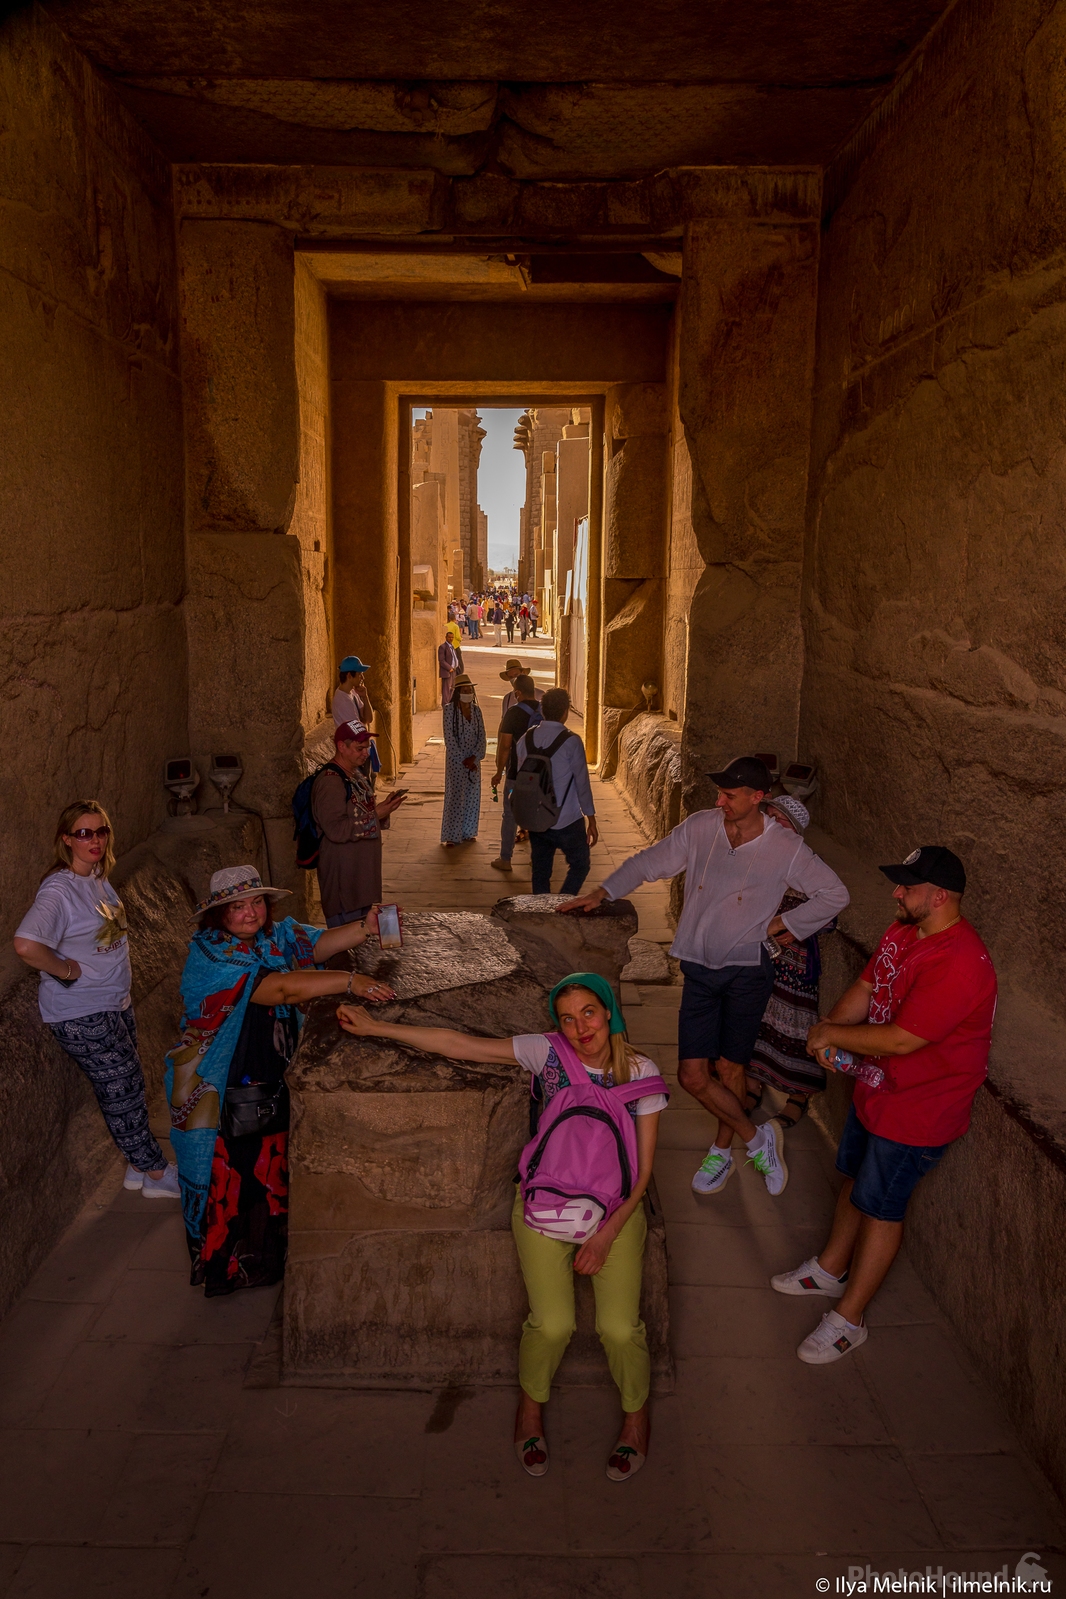 Image of Karnak Temple Complex (Karnak) by Ilya Melnik